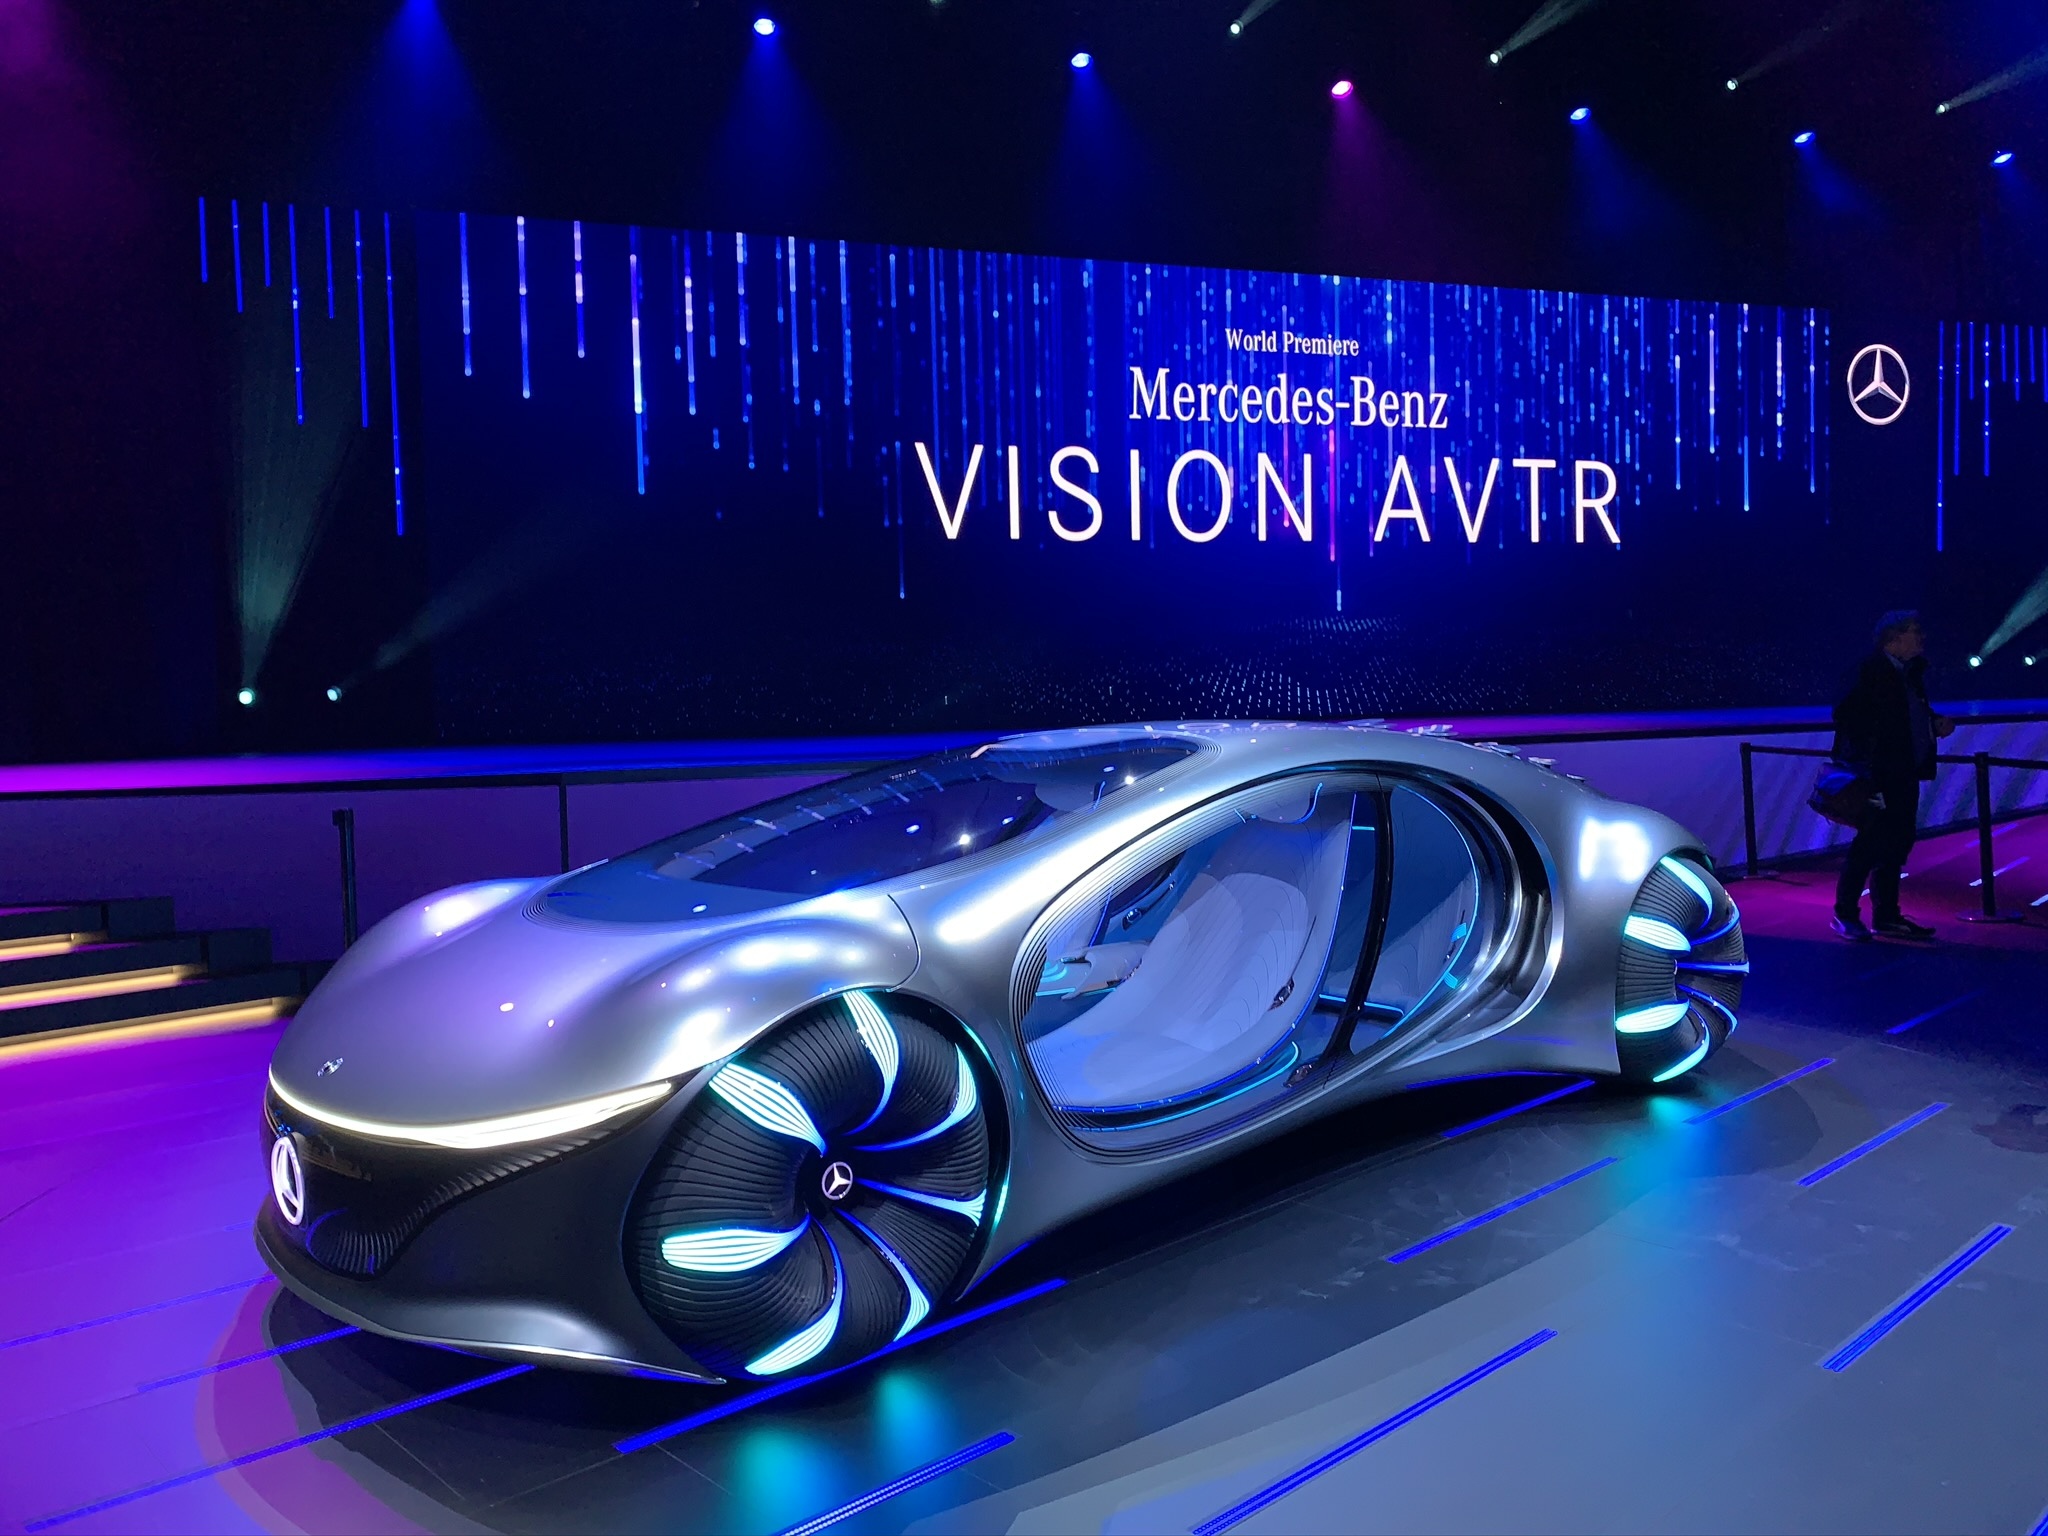 Mercedes Benz Vision AVR